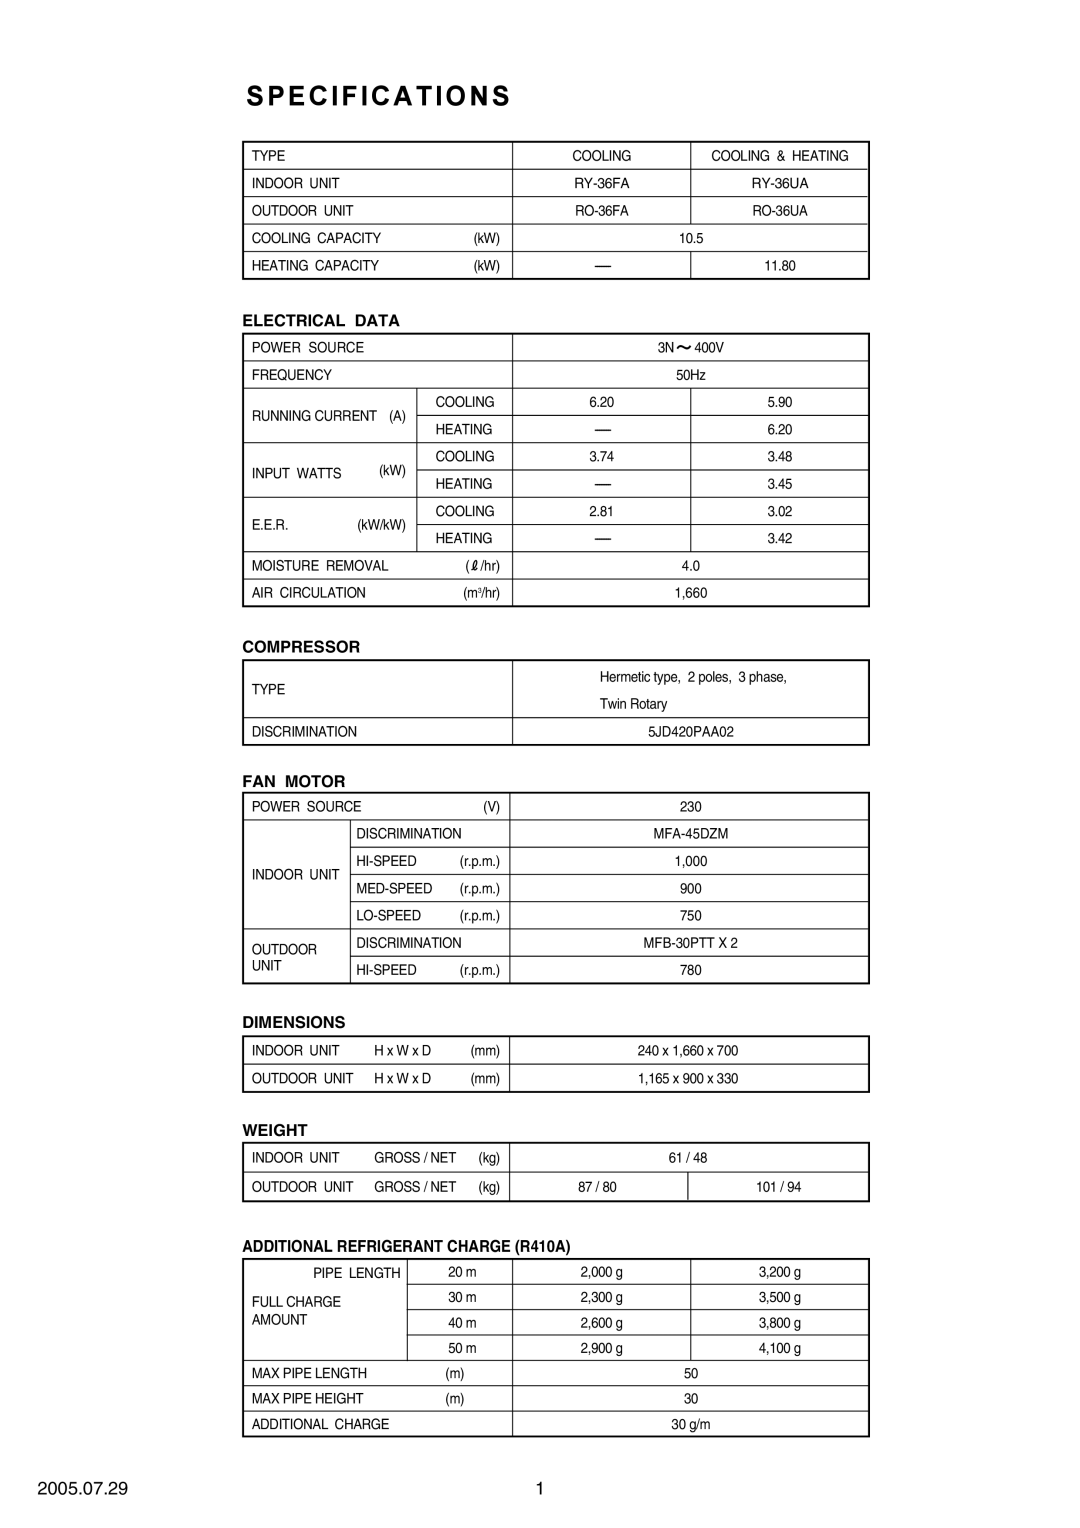 Fujitsu RY-36FA, RO-36FA, RY-36UA Specifications, 2005.07.29, Electrical Data, Compressor, Fan Motor, Dimensions, Weight 